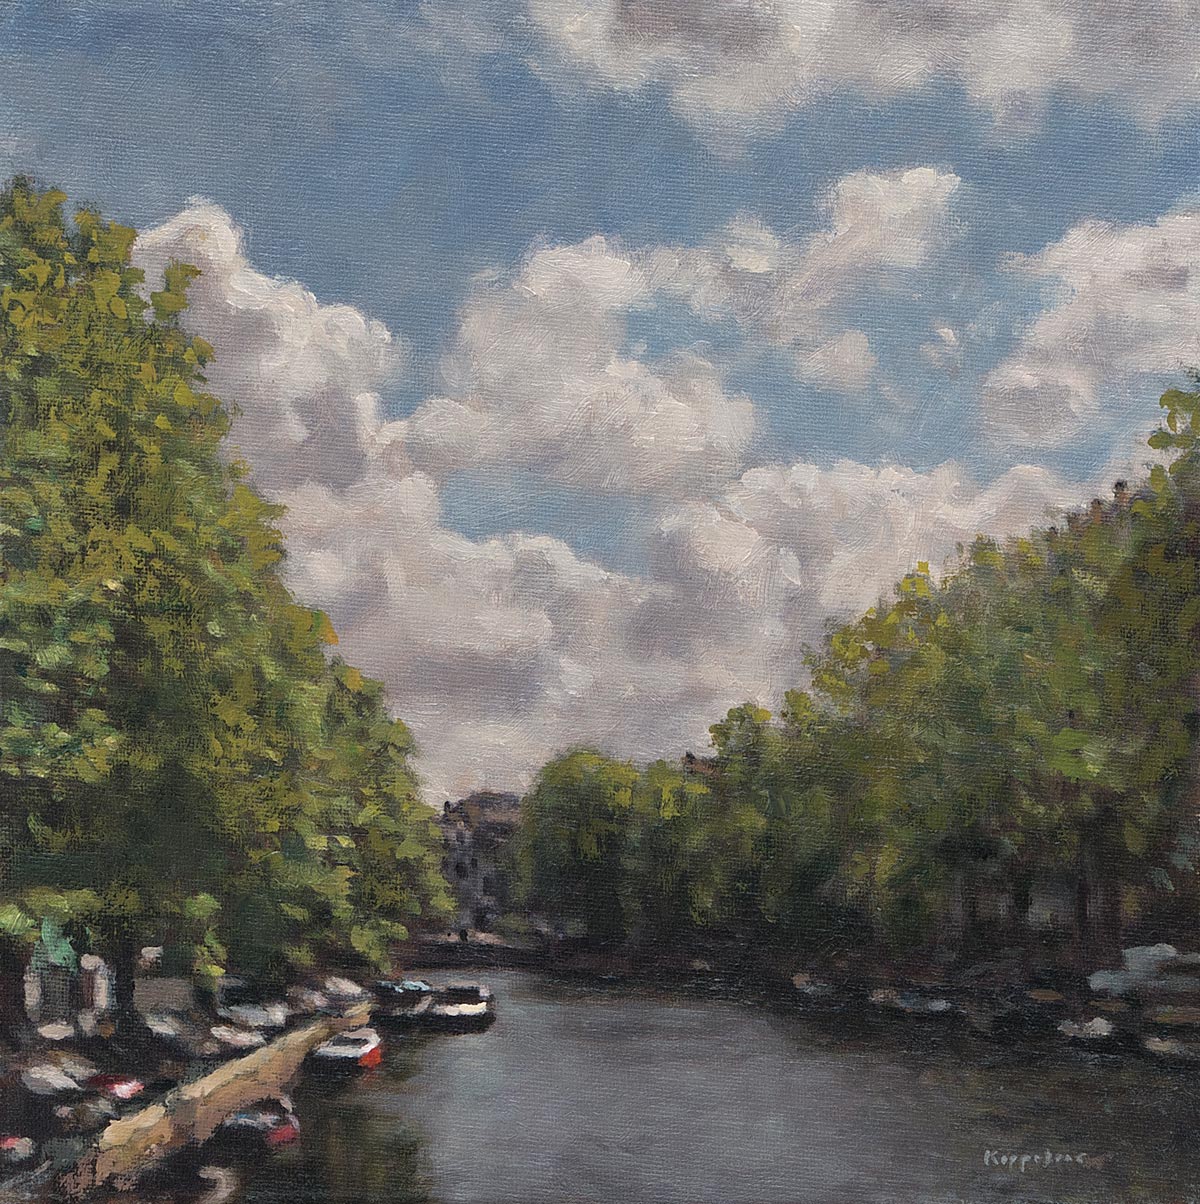 cityscape: 'Amsterdam Canal, Backlight' oil on canvas marouflée by Dutch painter Frans Koppelaar.